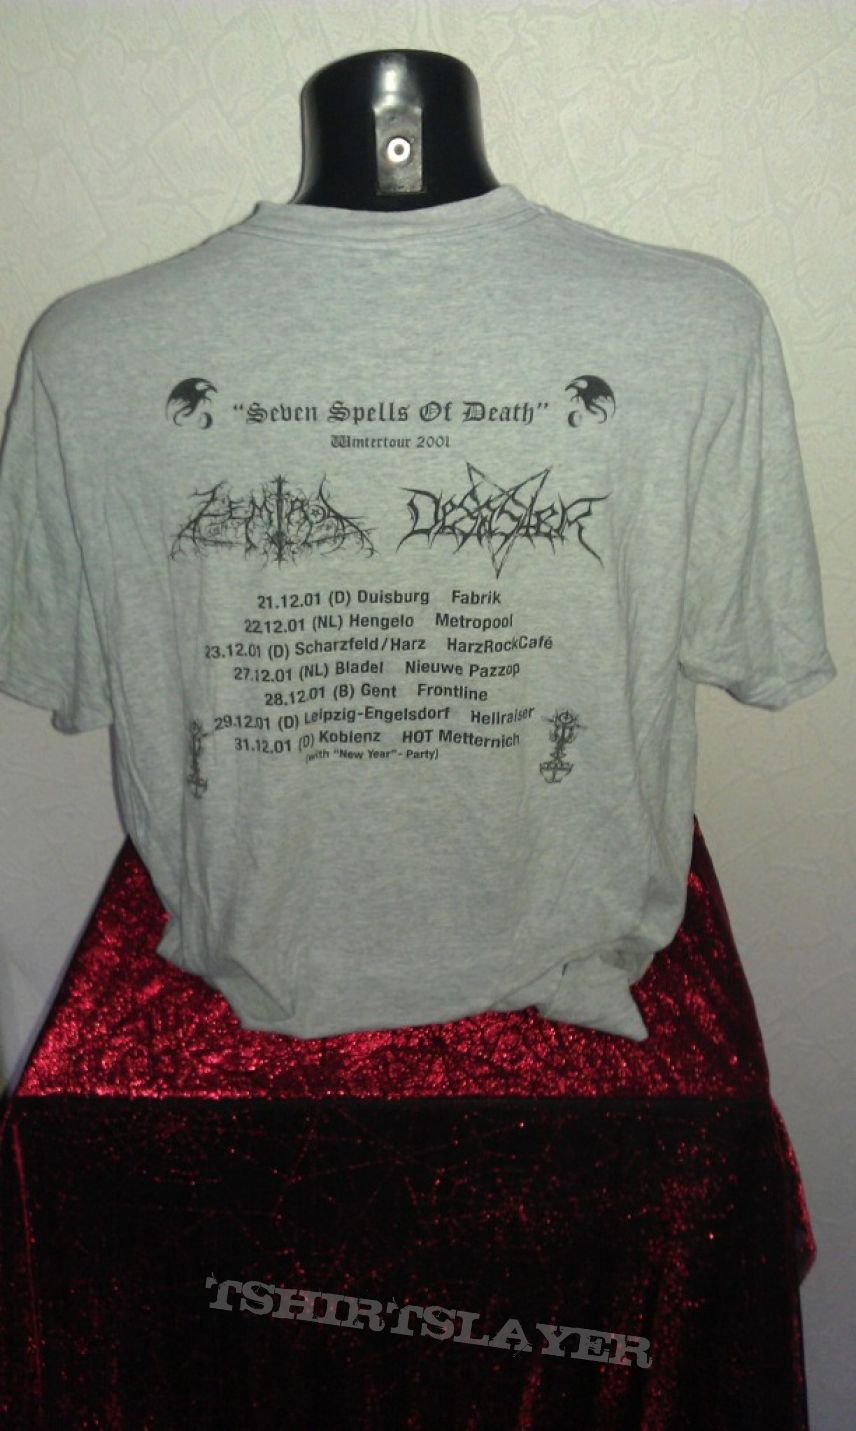 Zemial/Desaster-Seven Spells of Death Tour Shirt